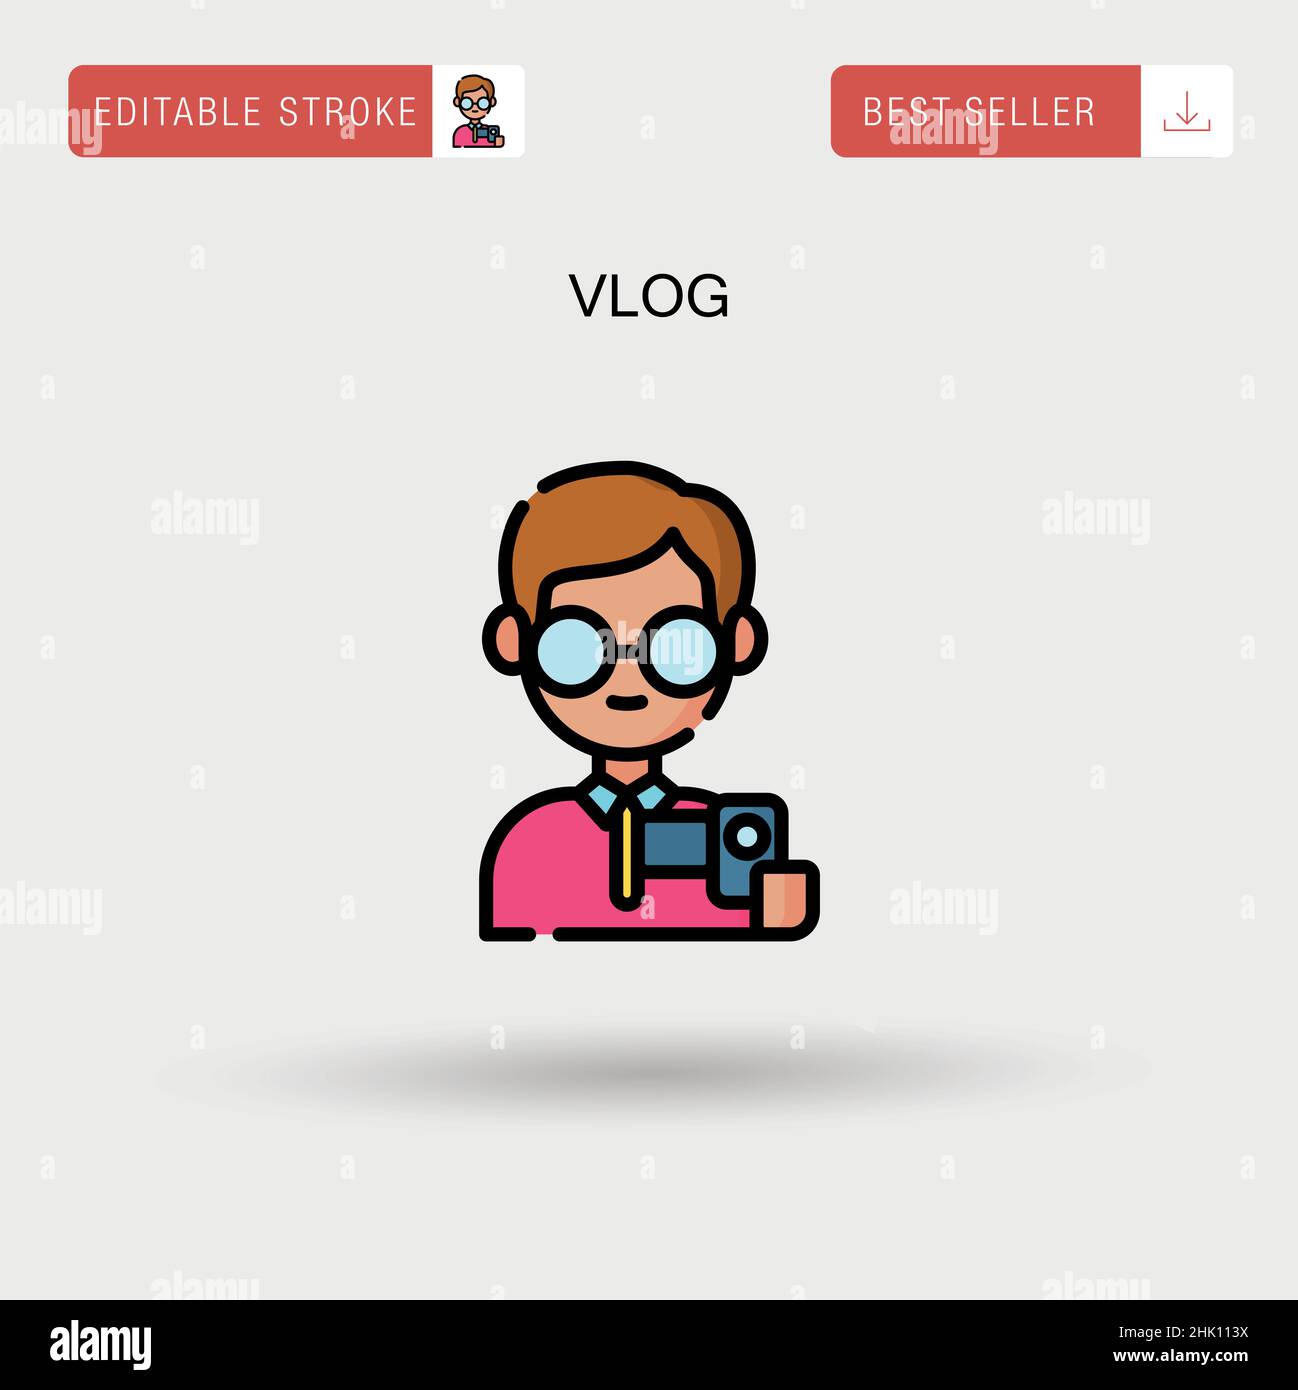 Vlog Simple vector icon. Stock Vector